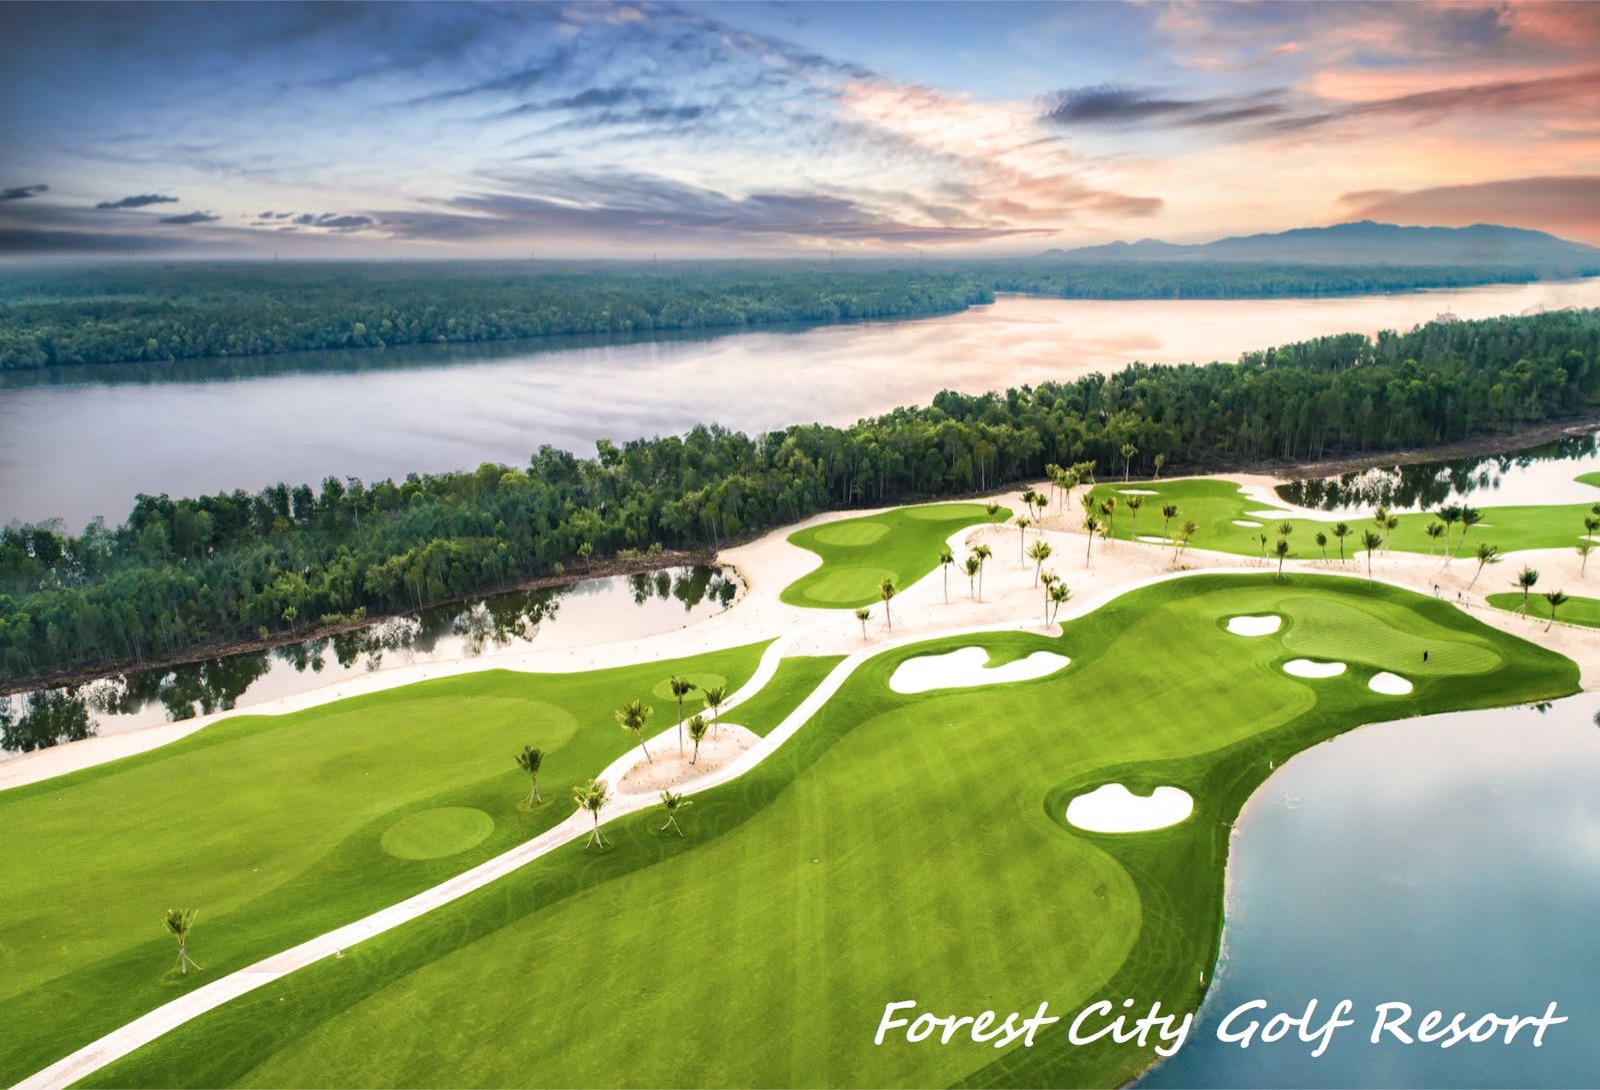 Forest City Golf Resort